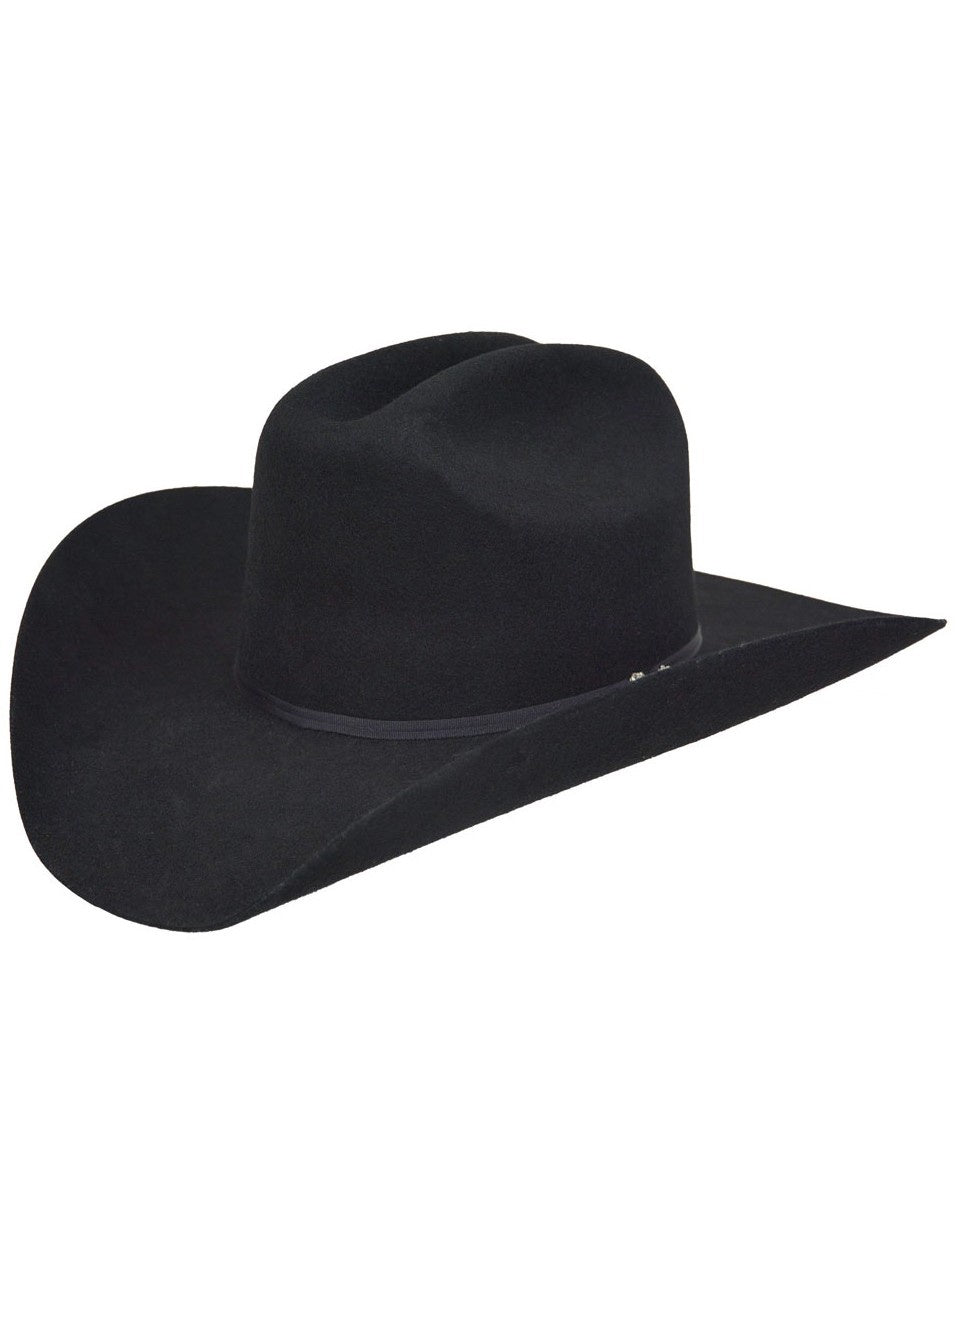 Wrangler Brodie Black Felt Cowboy Hat